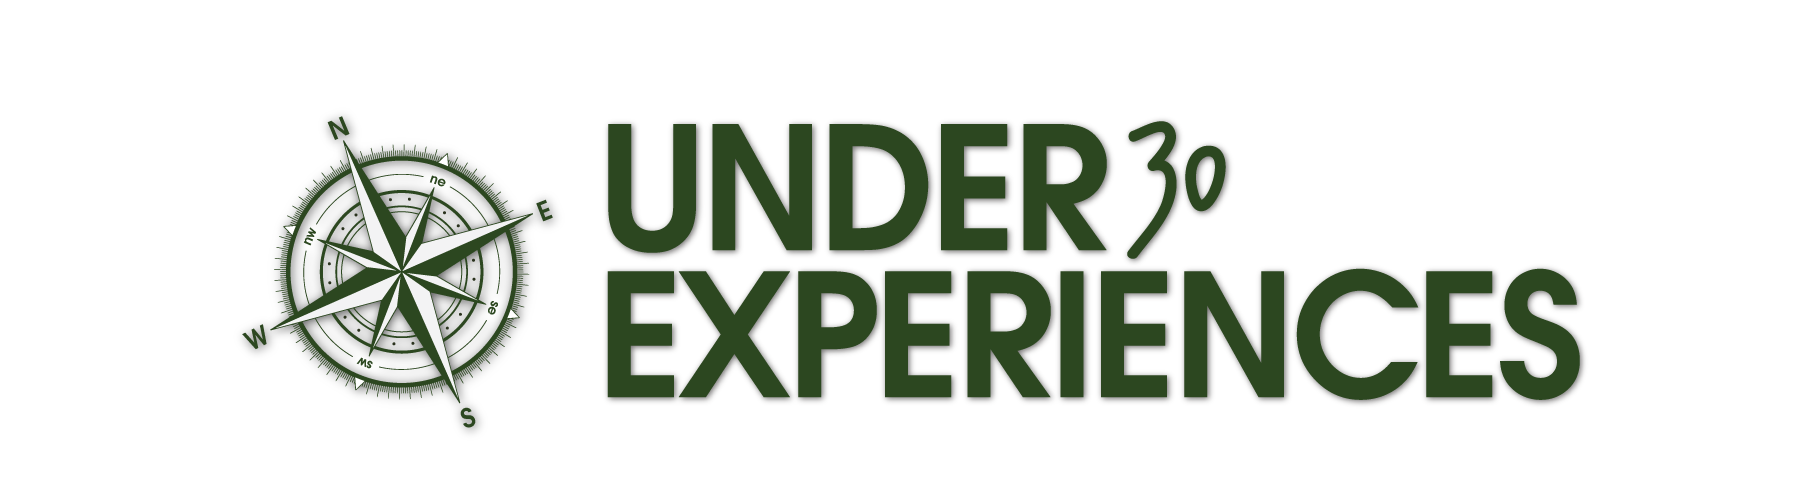 under-30-experiences-logo